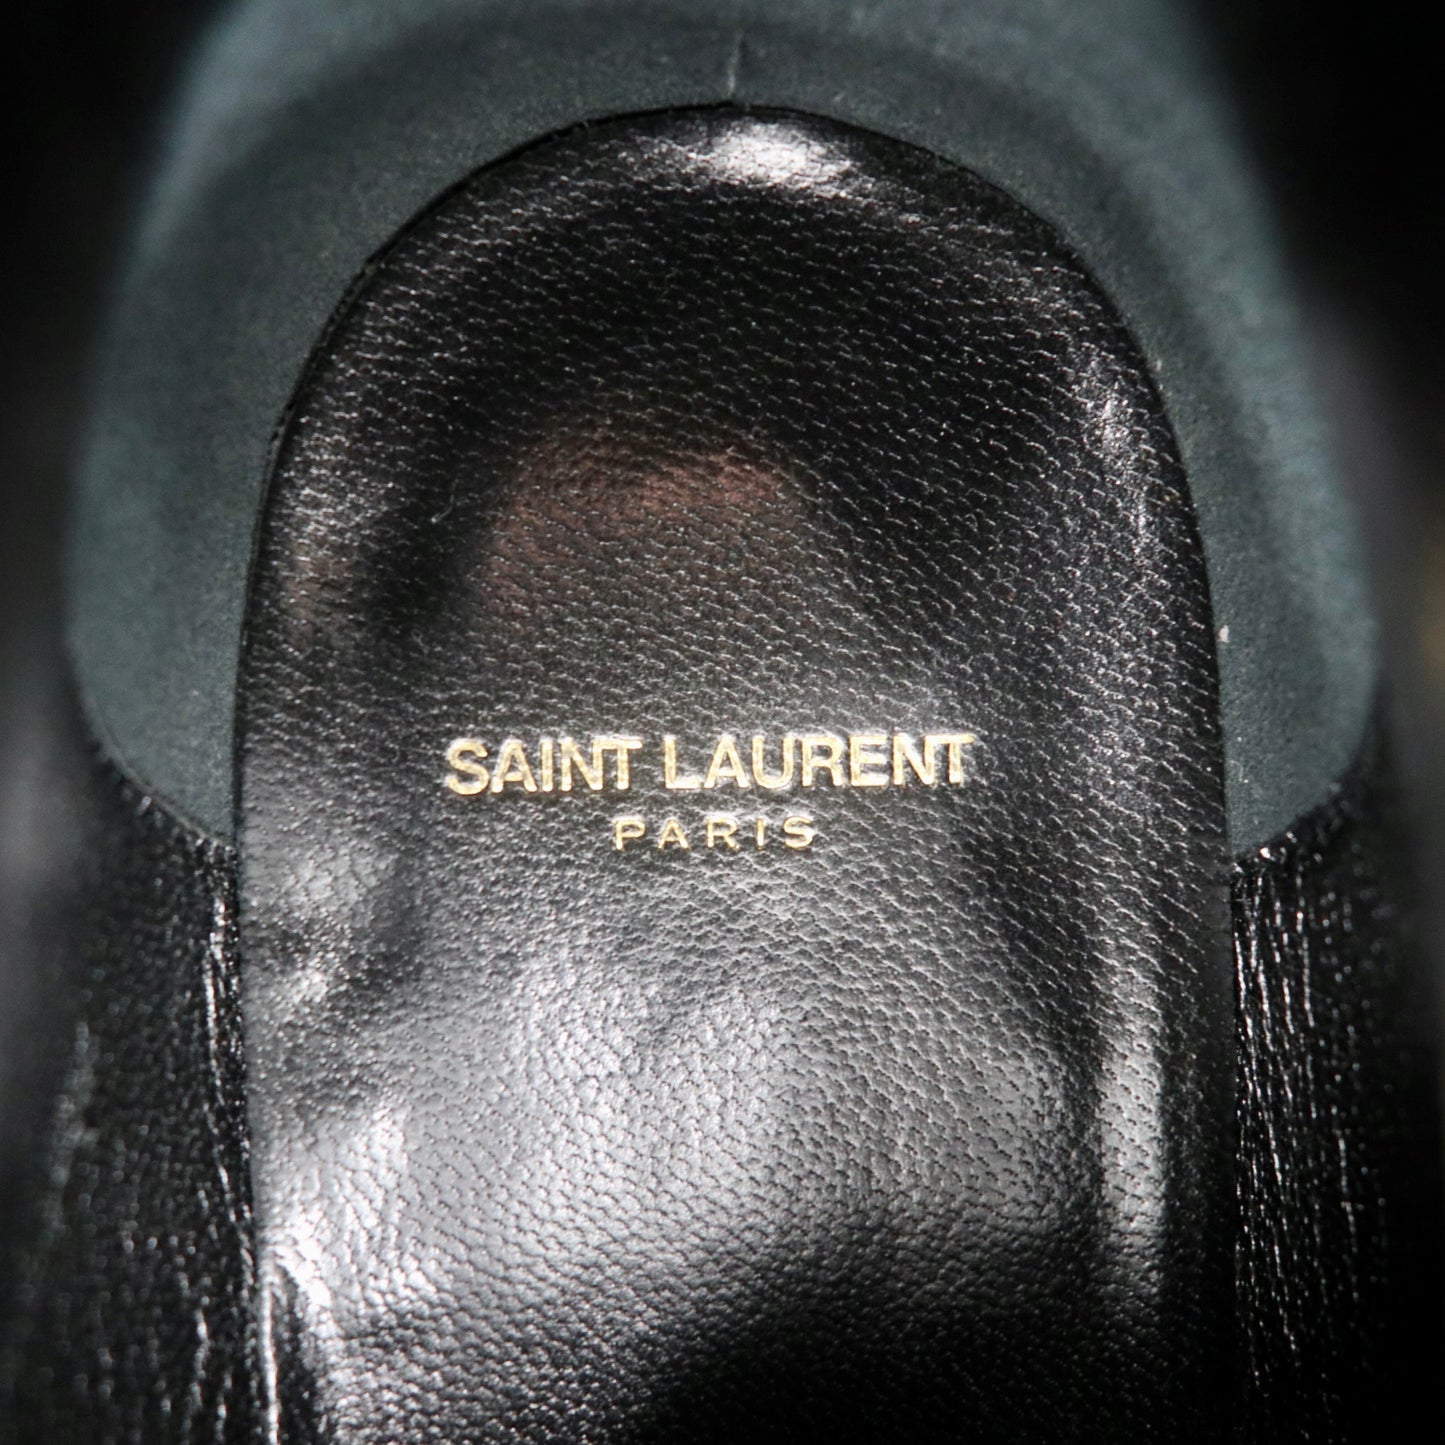 SAINT LAURENT PARIS スエードジョッパーブーツ 25.5cm グレー 379762